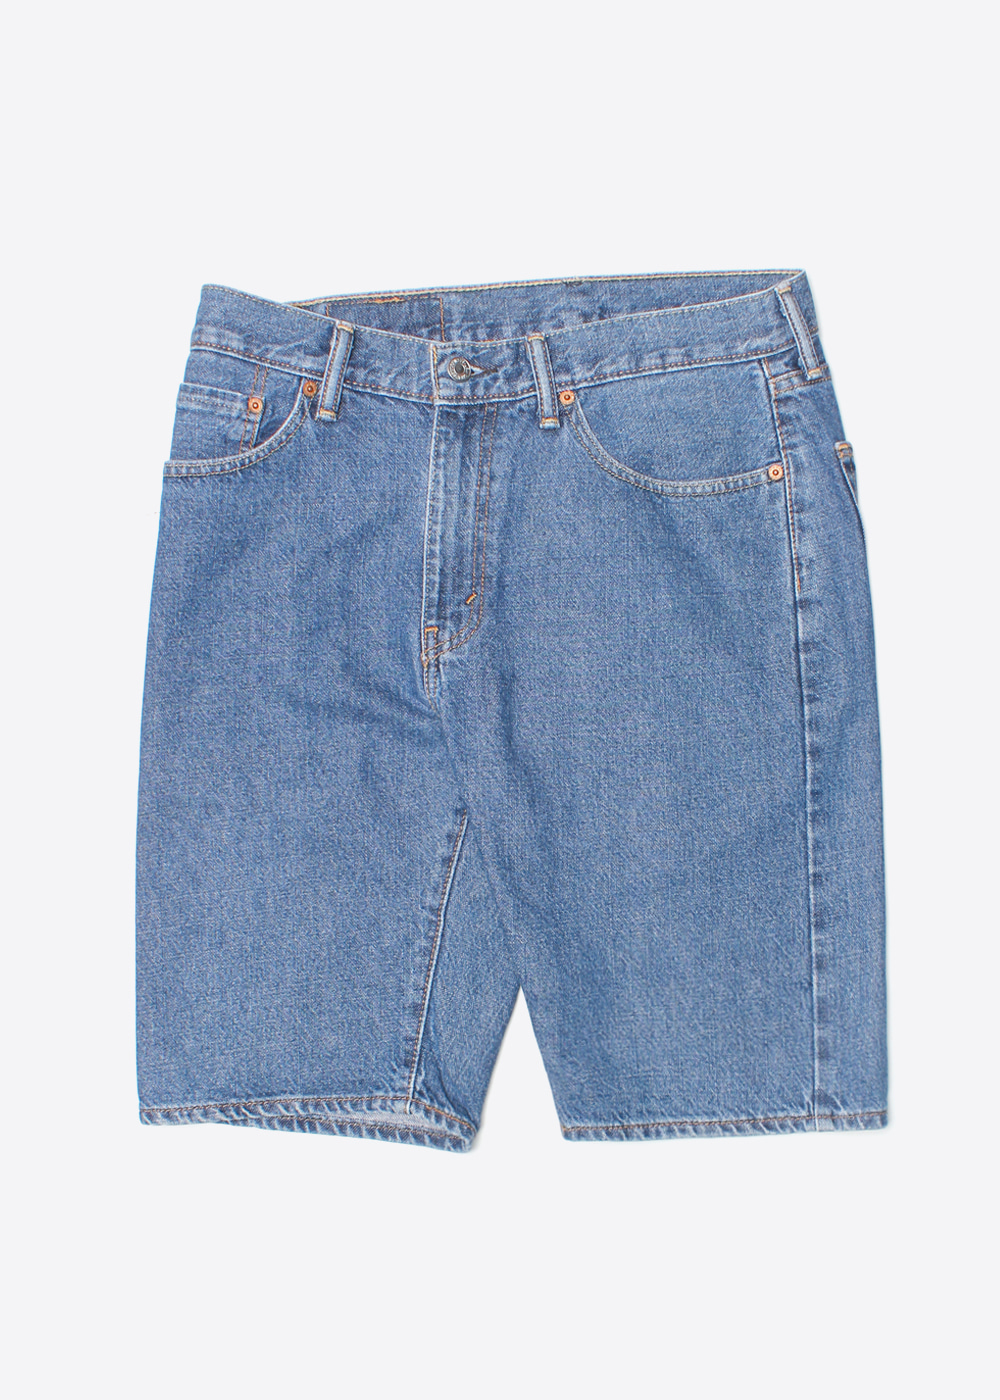 LEVI’S 505’straight fit’u.s.a vintage denim shorts